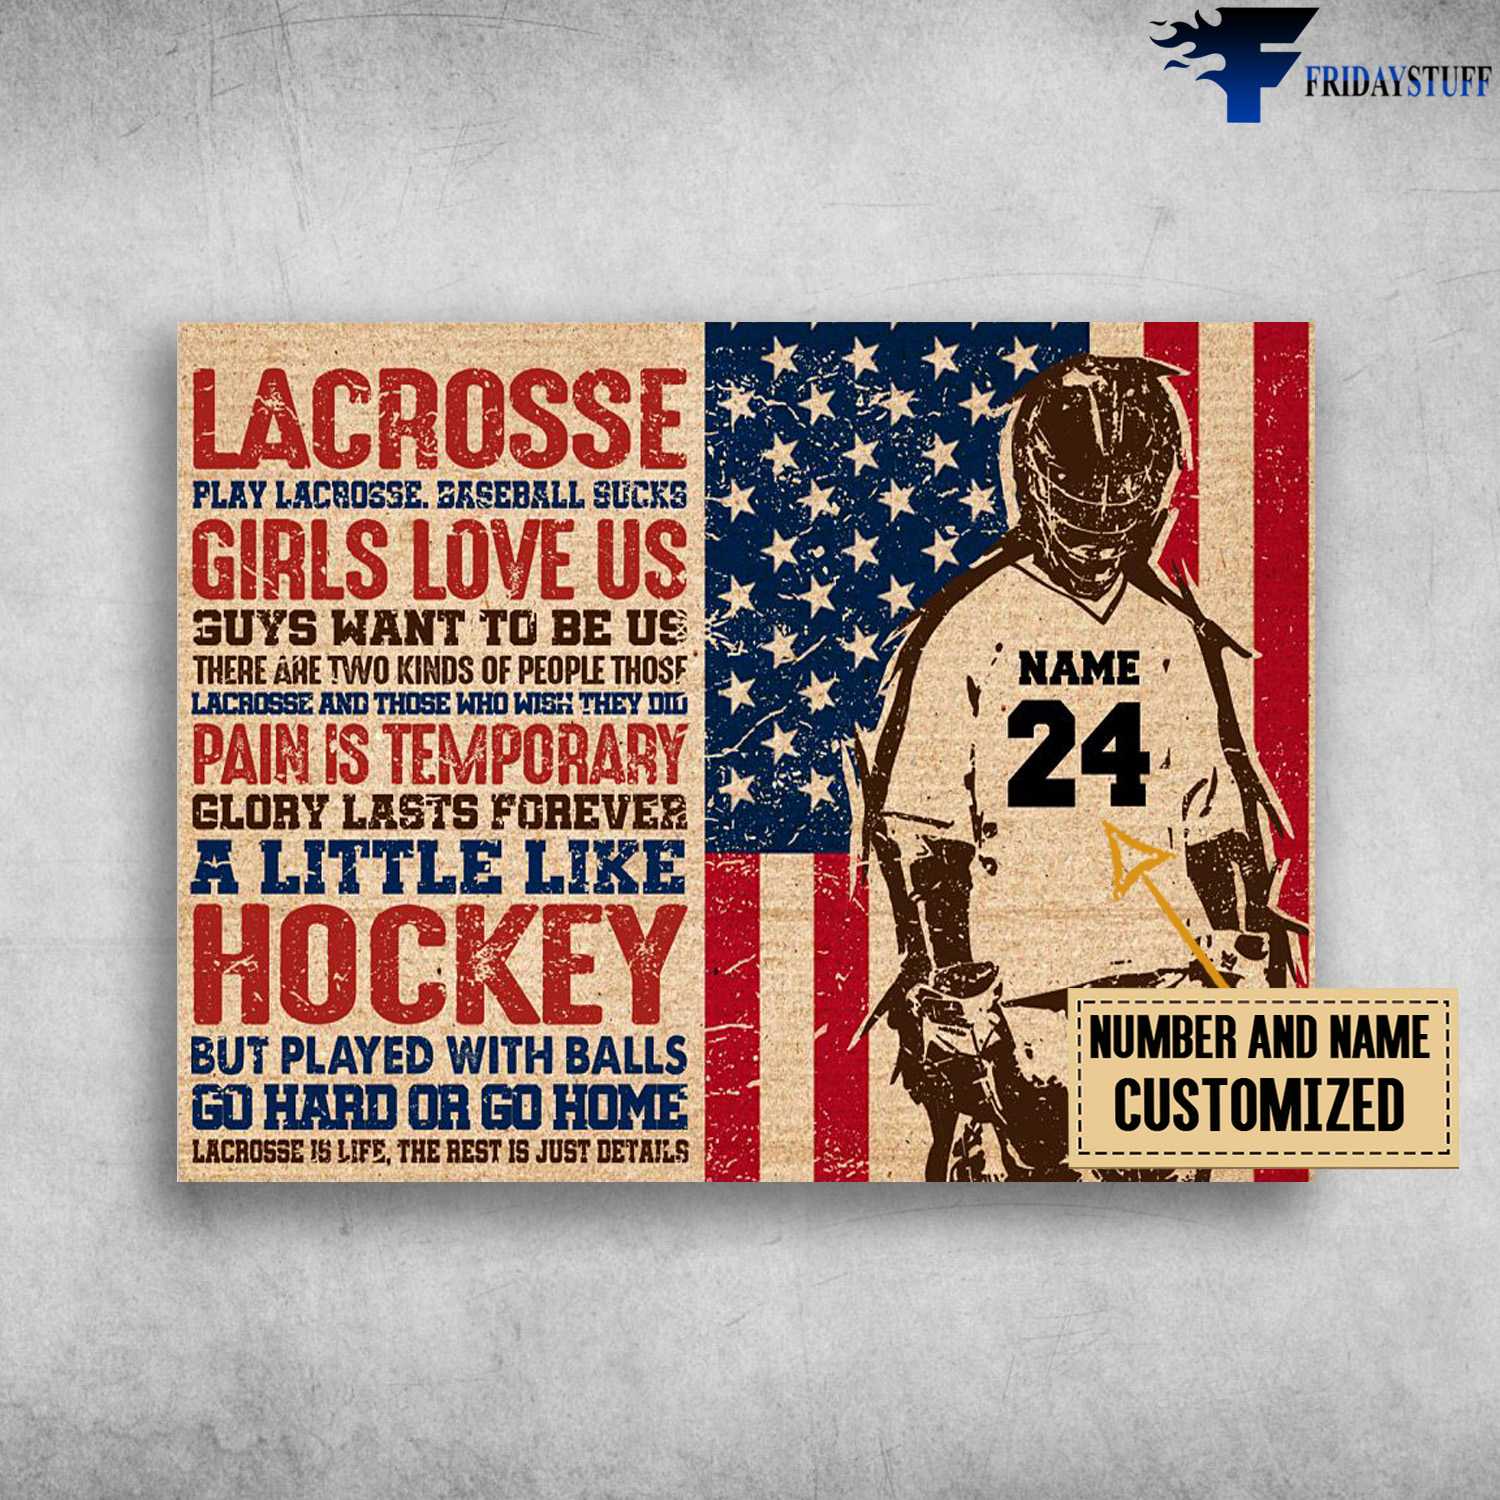 Lacrosse Poster, Lacrosse Player, American Lacrosse Poster, Baseball Sucks, Girls Love Us, Guys Want To Be Us